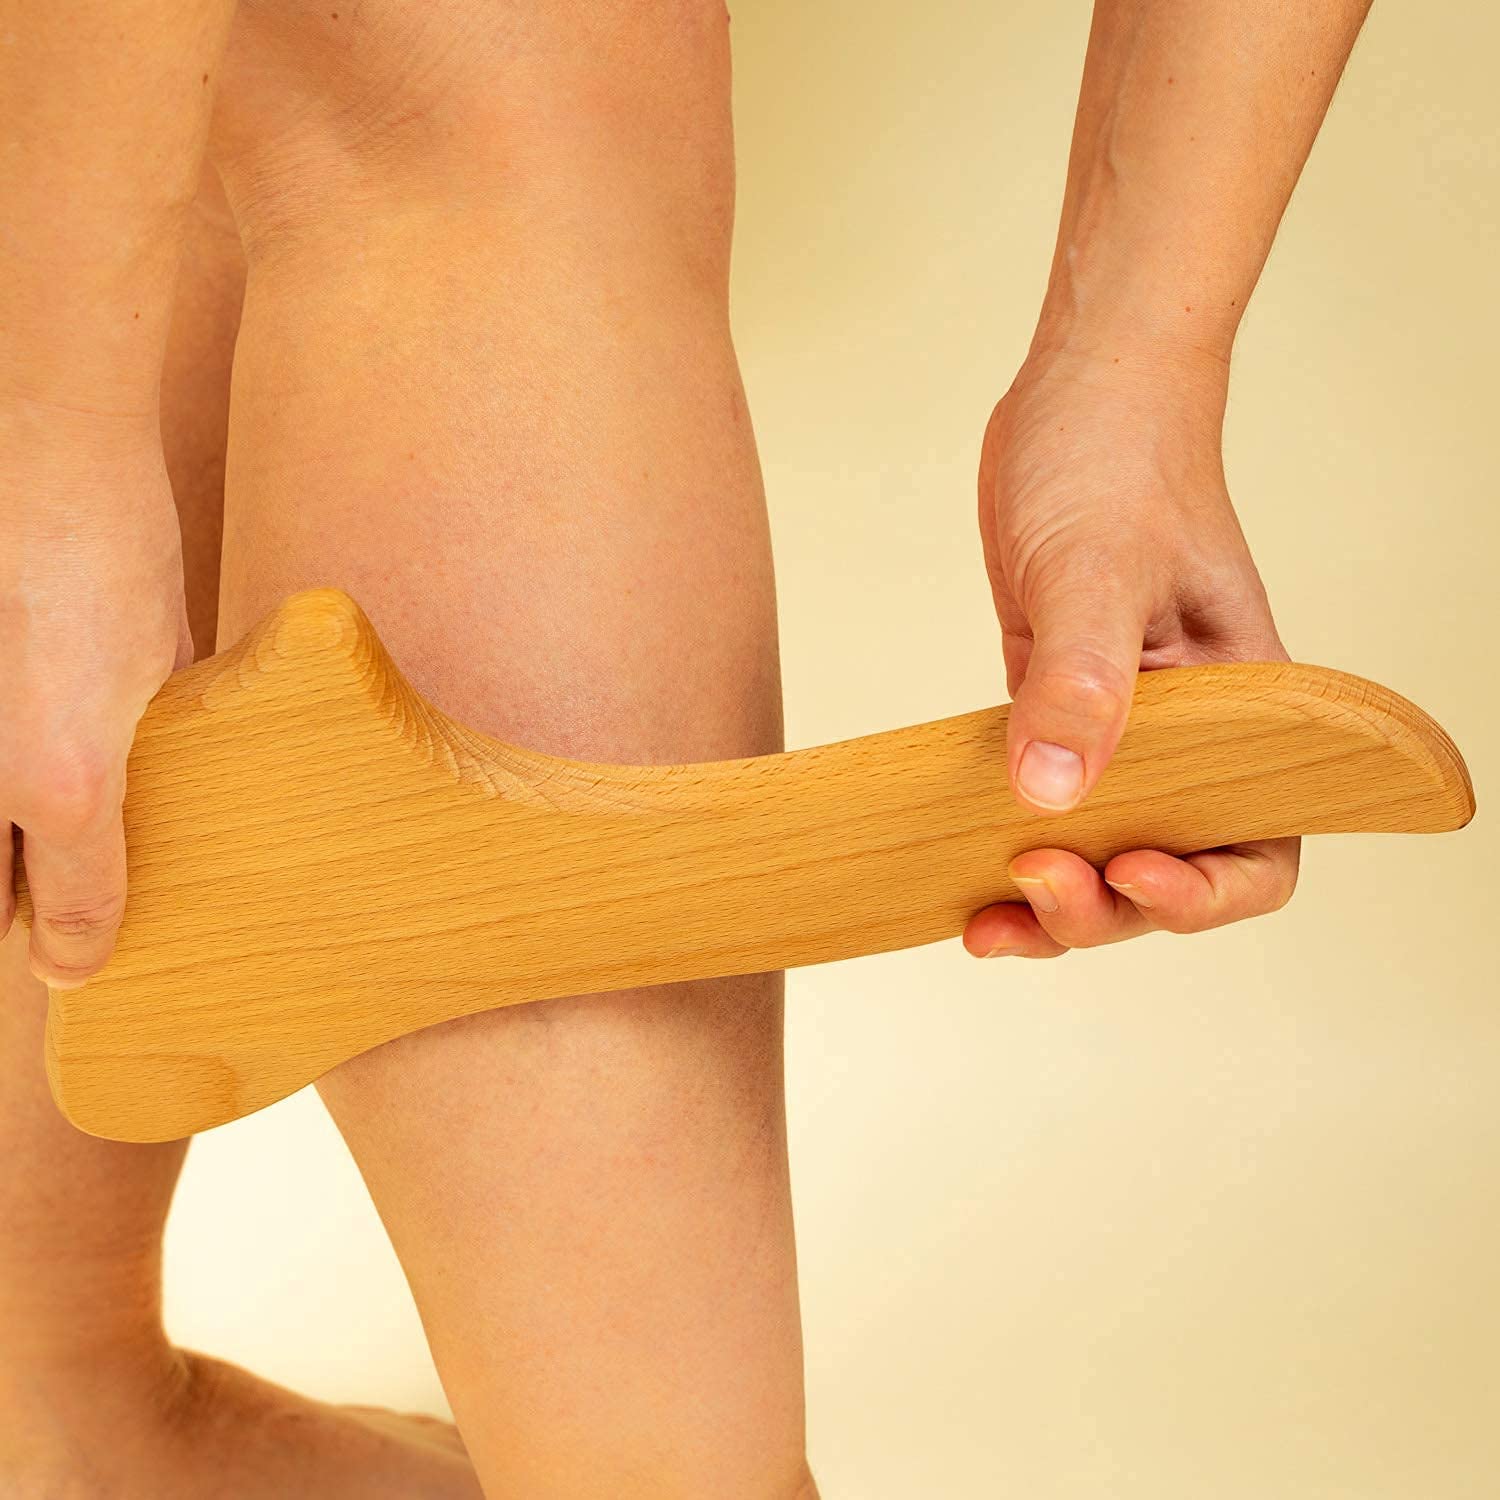 Lymphatic Drainage Paddle - Anti Cellulite Massage Gua Sha Tool